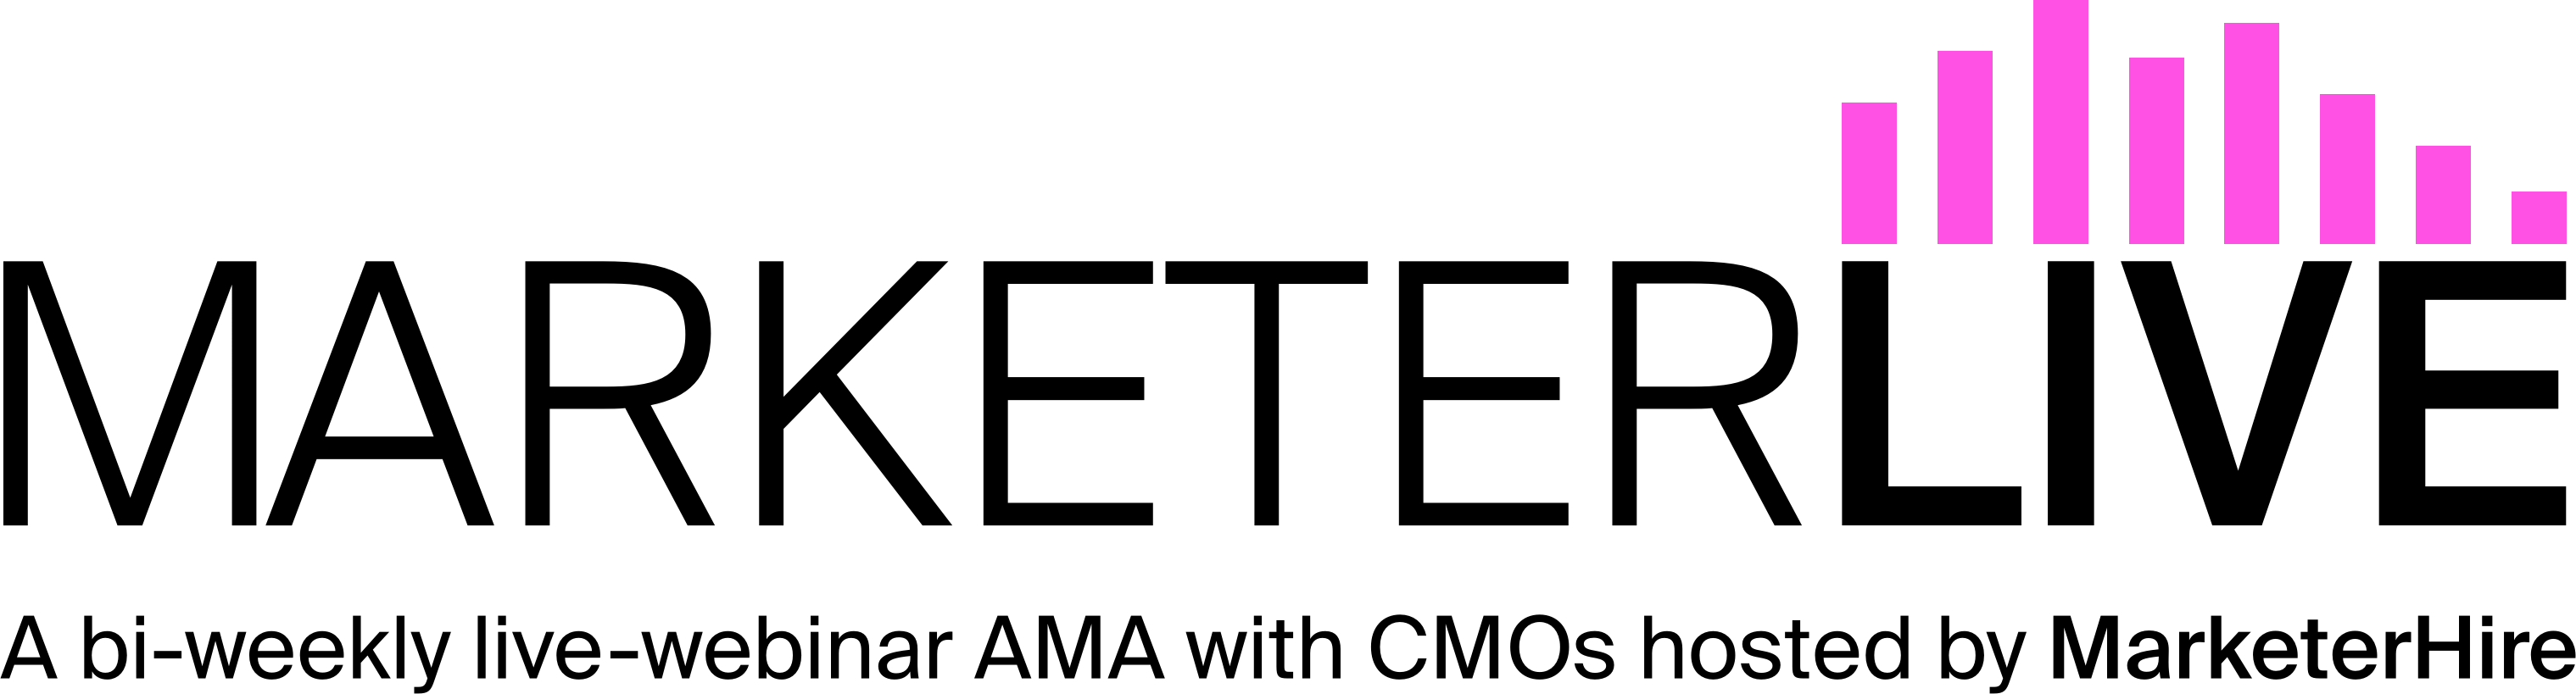 MarketerLive logo-1